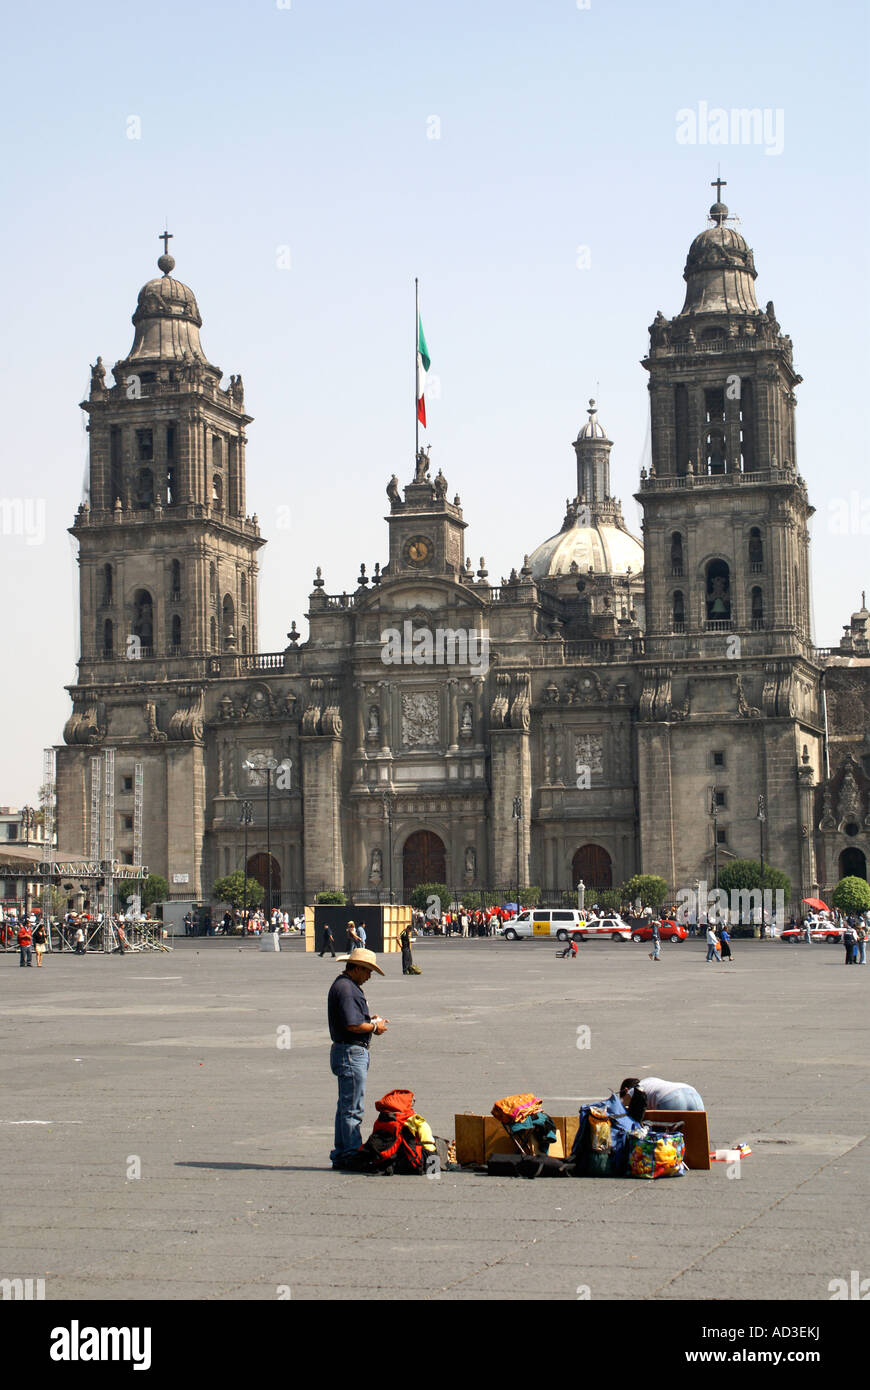 Metropolitan_Cathedral_Mexico_City-AD3EK